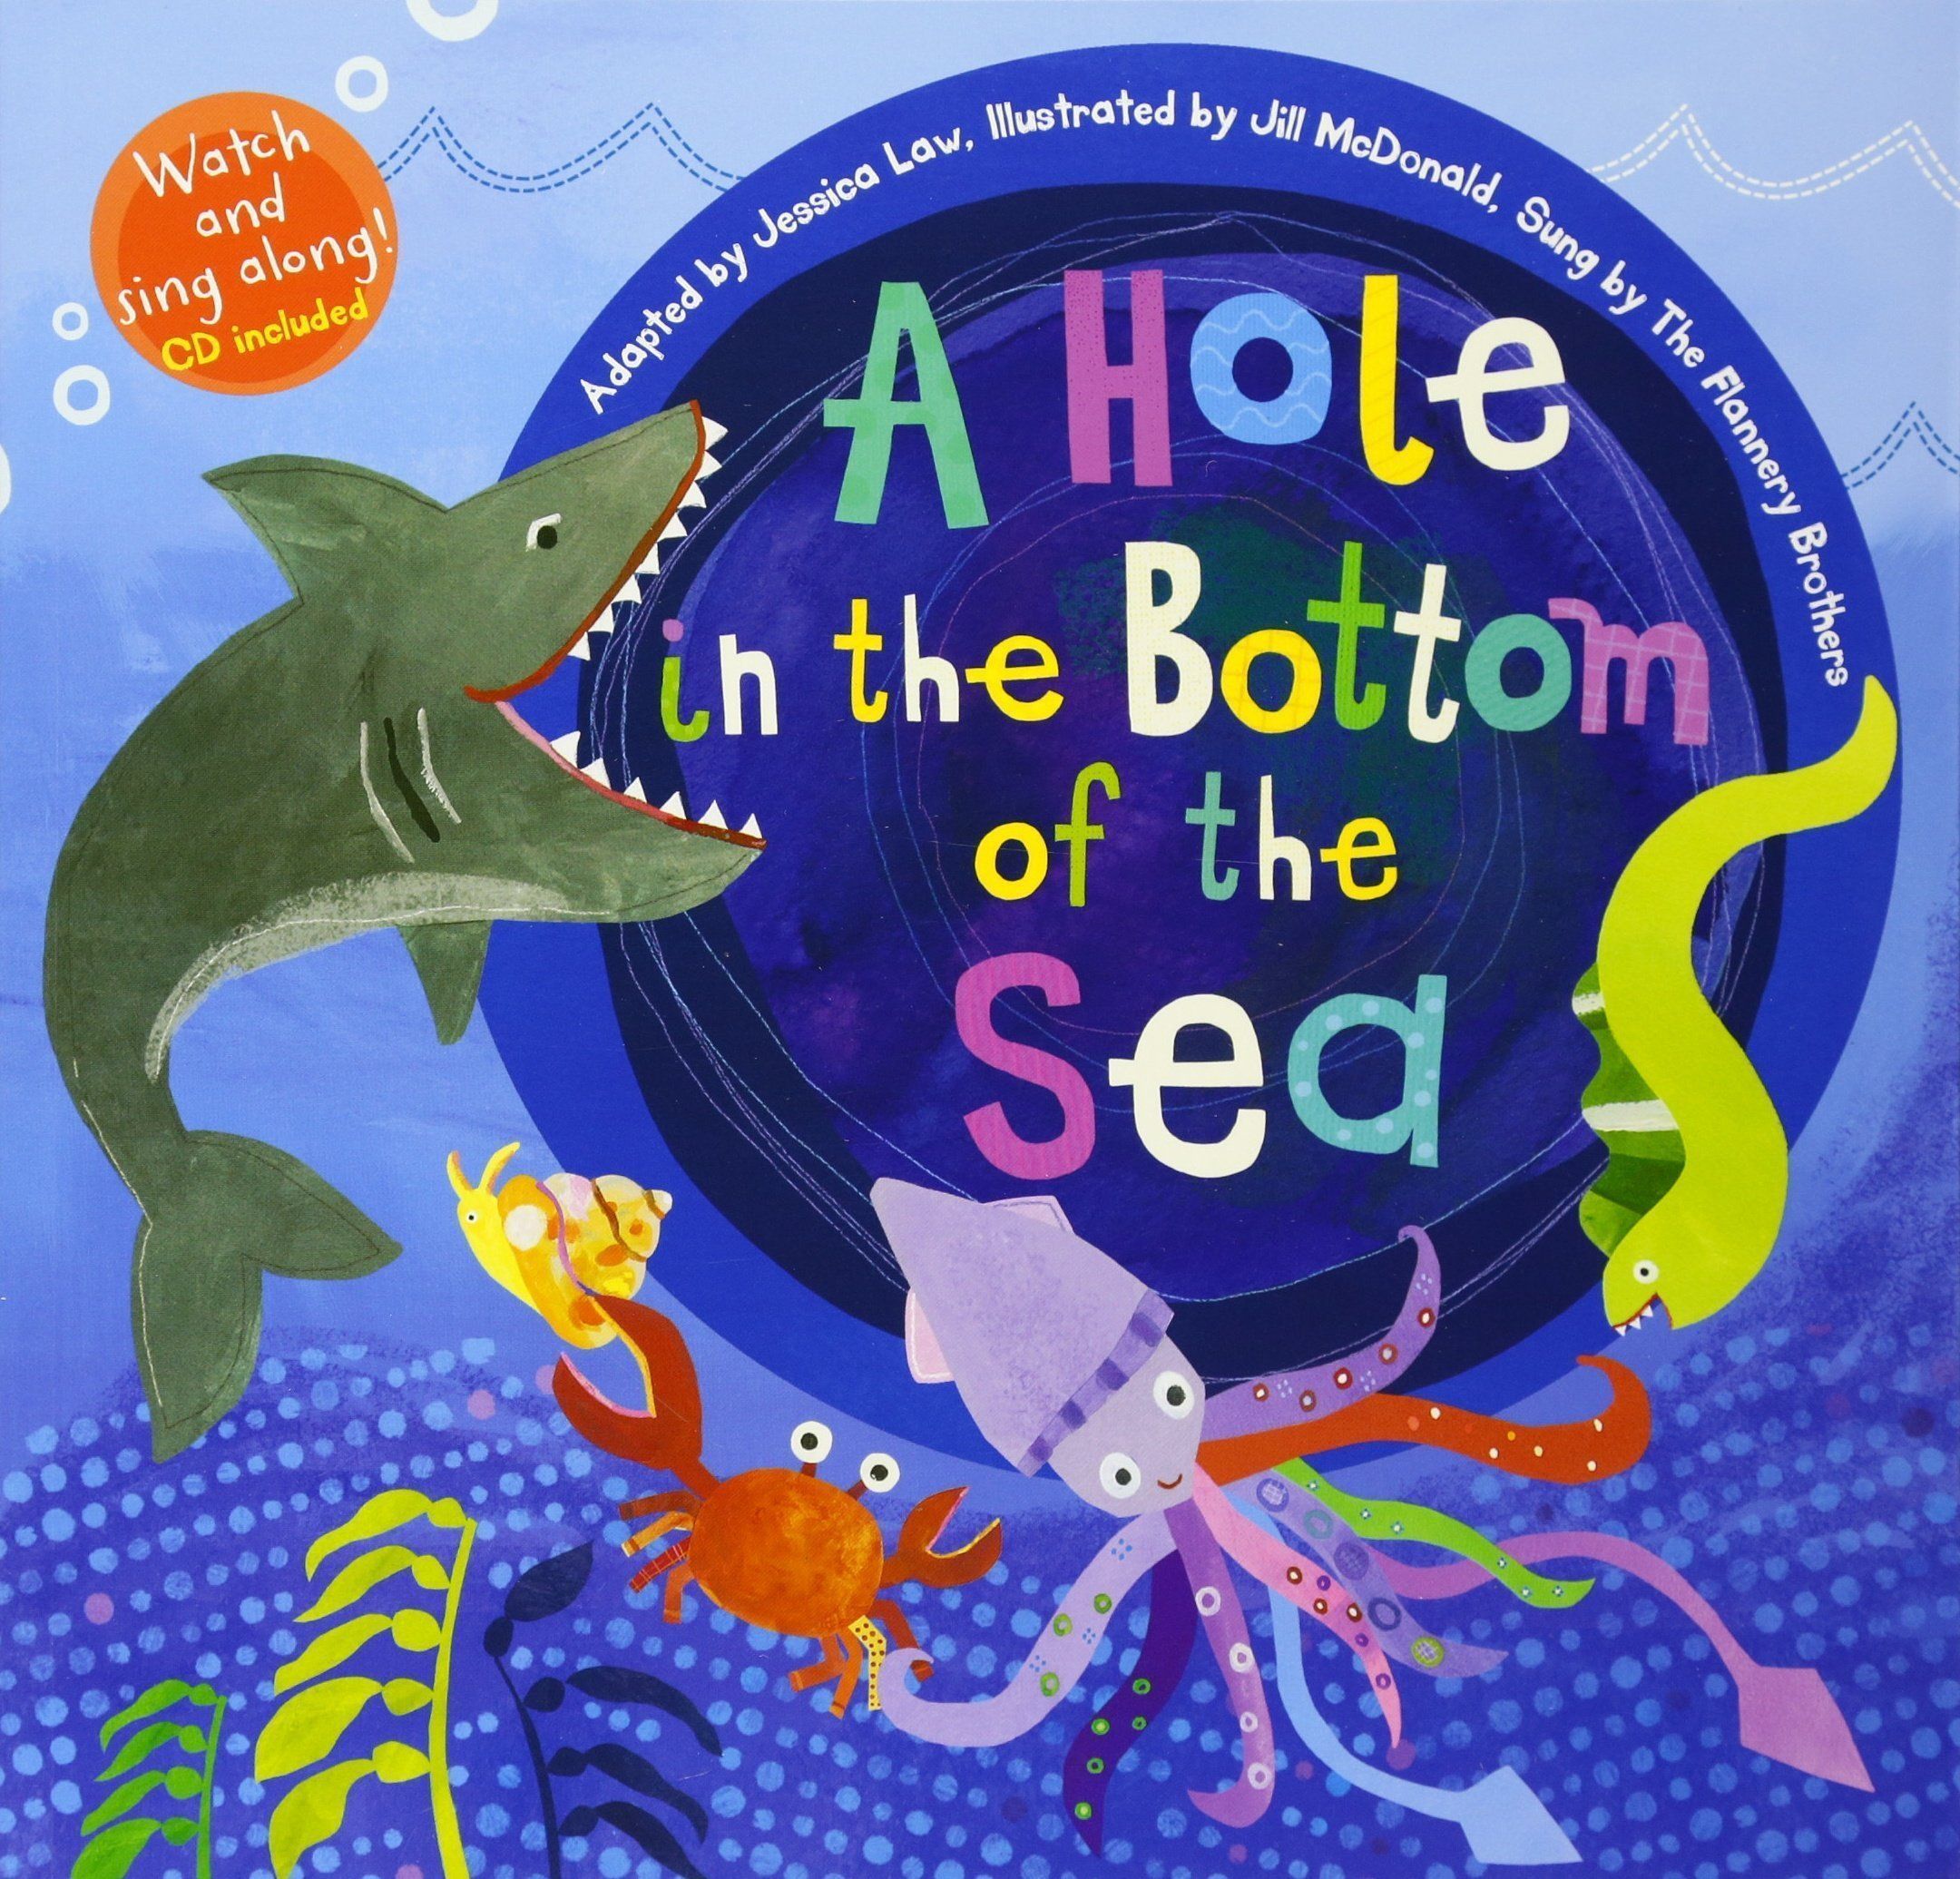 Hole bottom of the sea